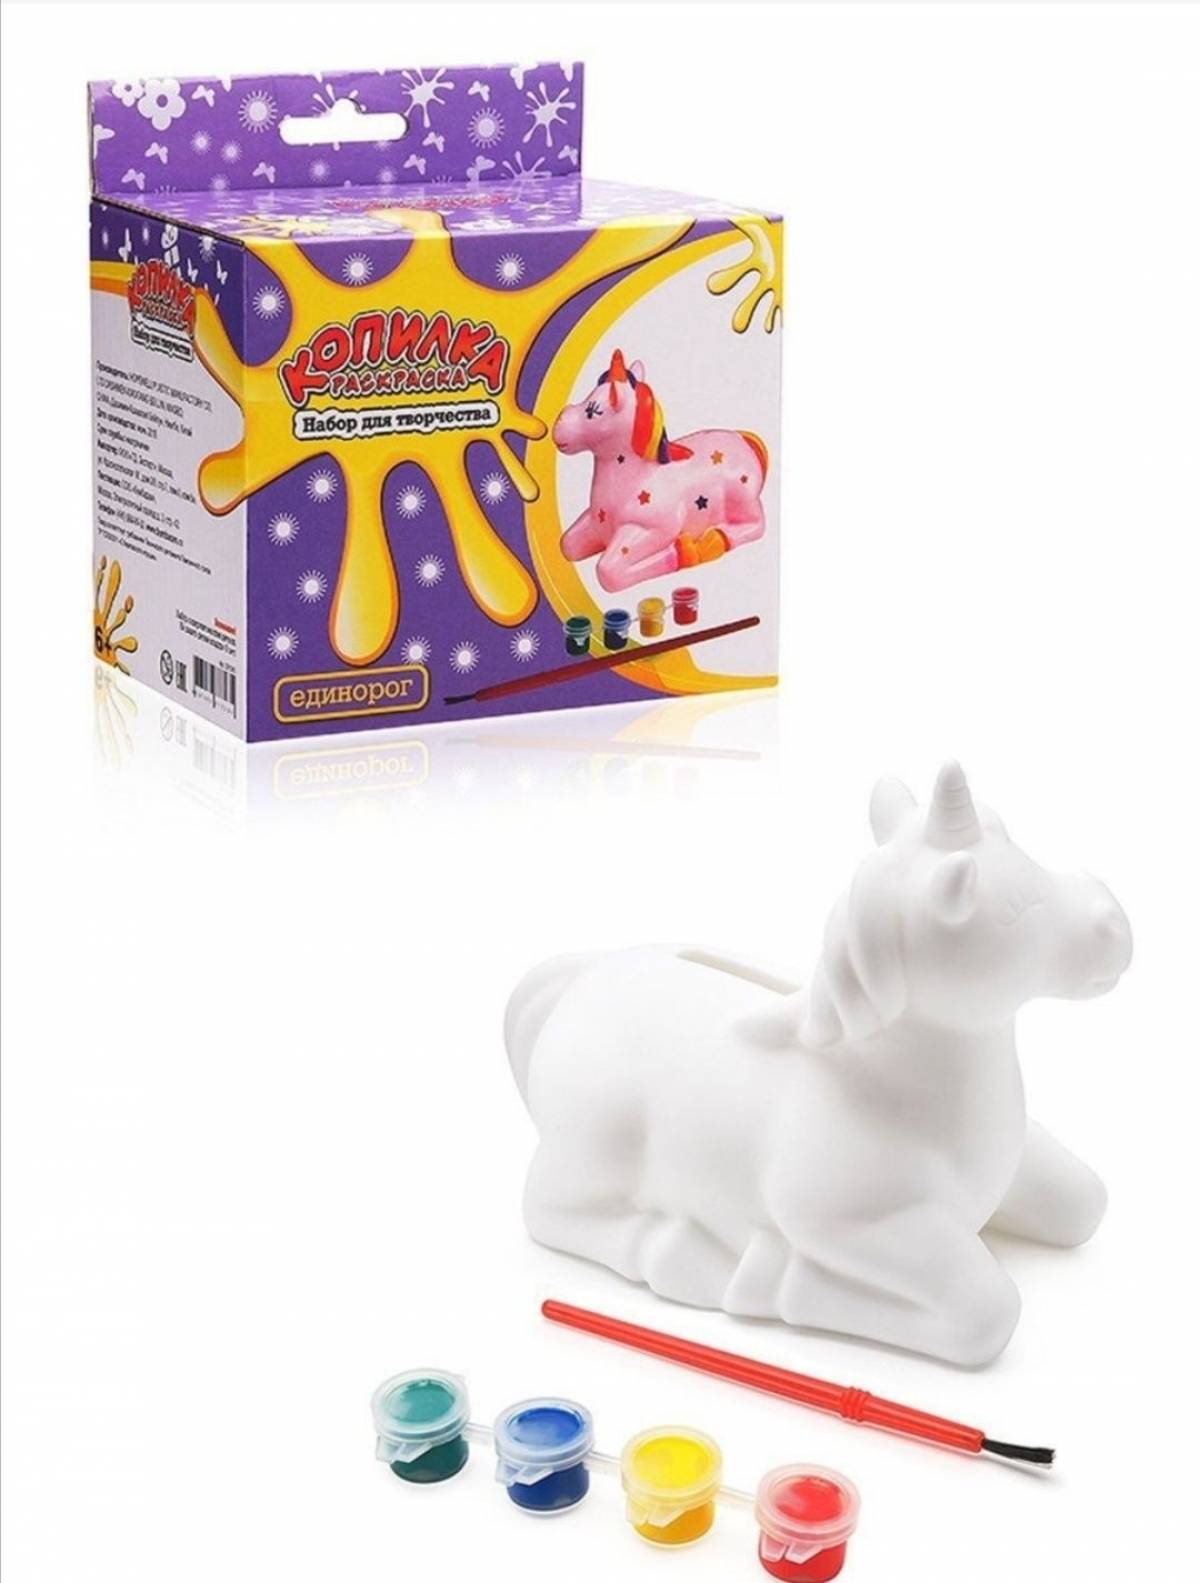 Glamor coloring piggy bank unicorn